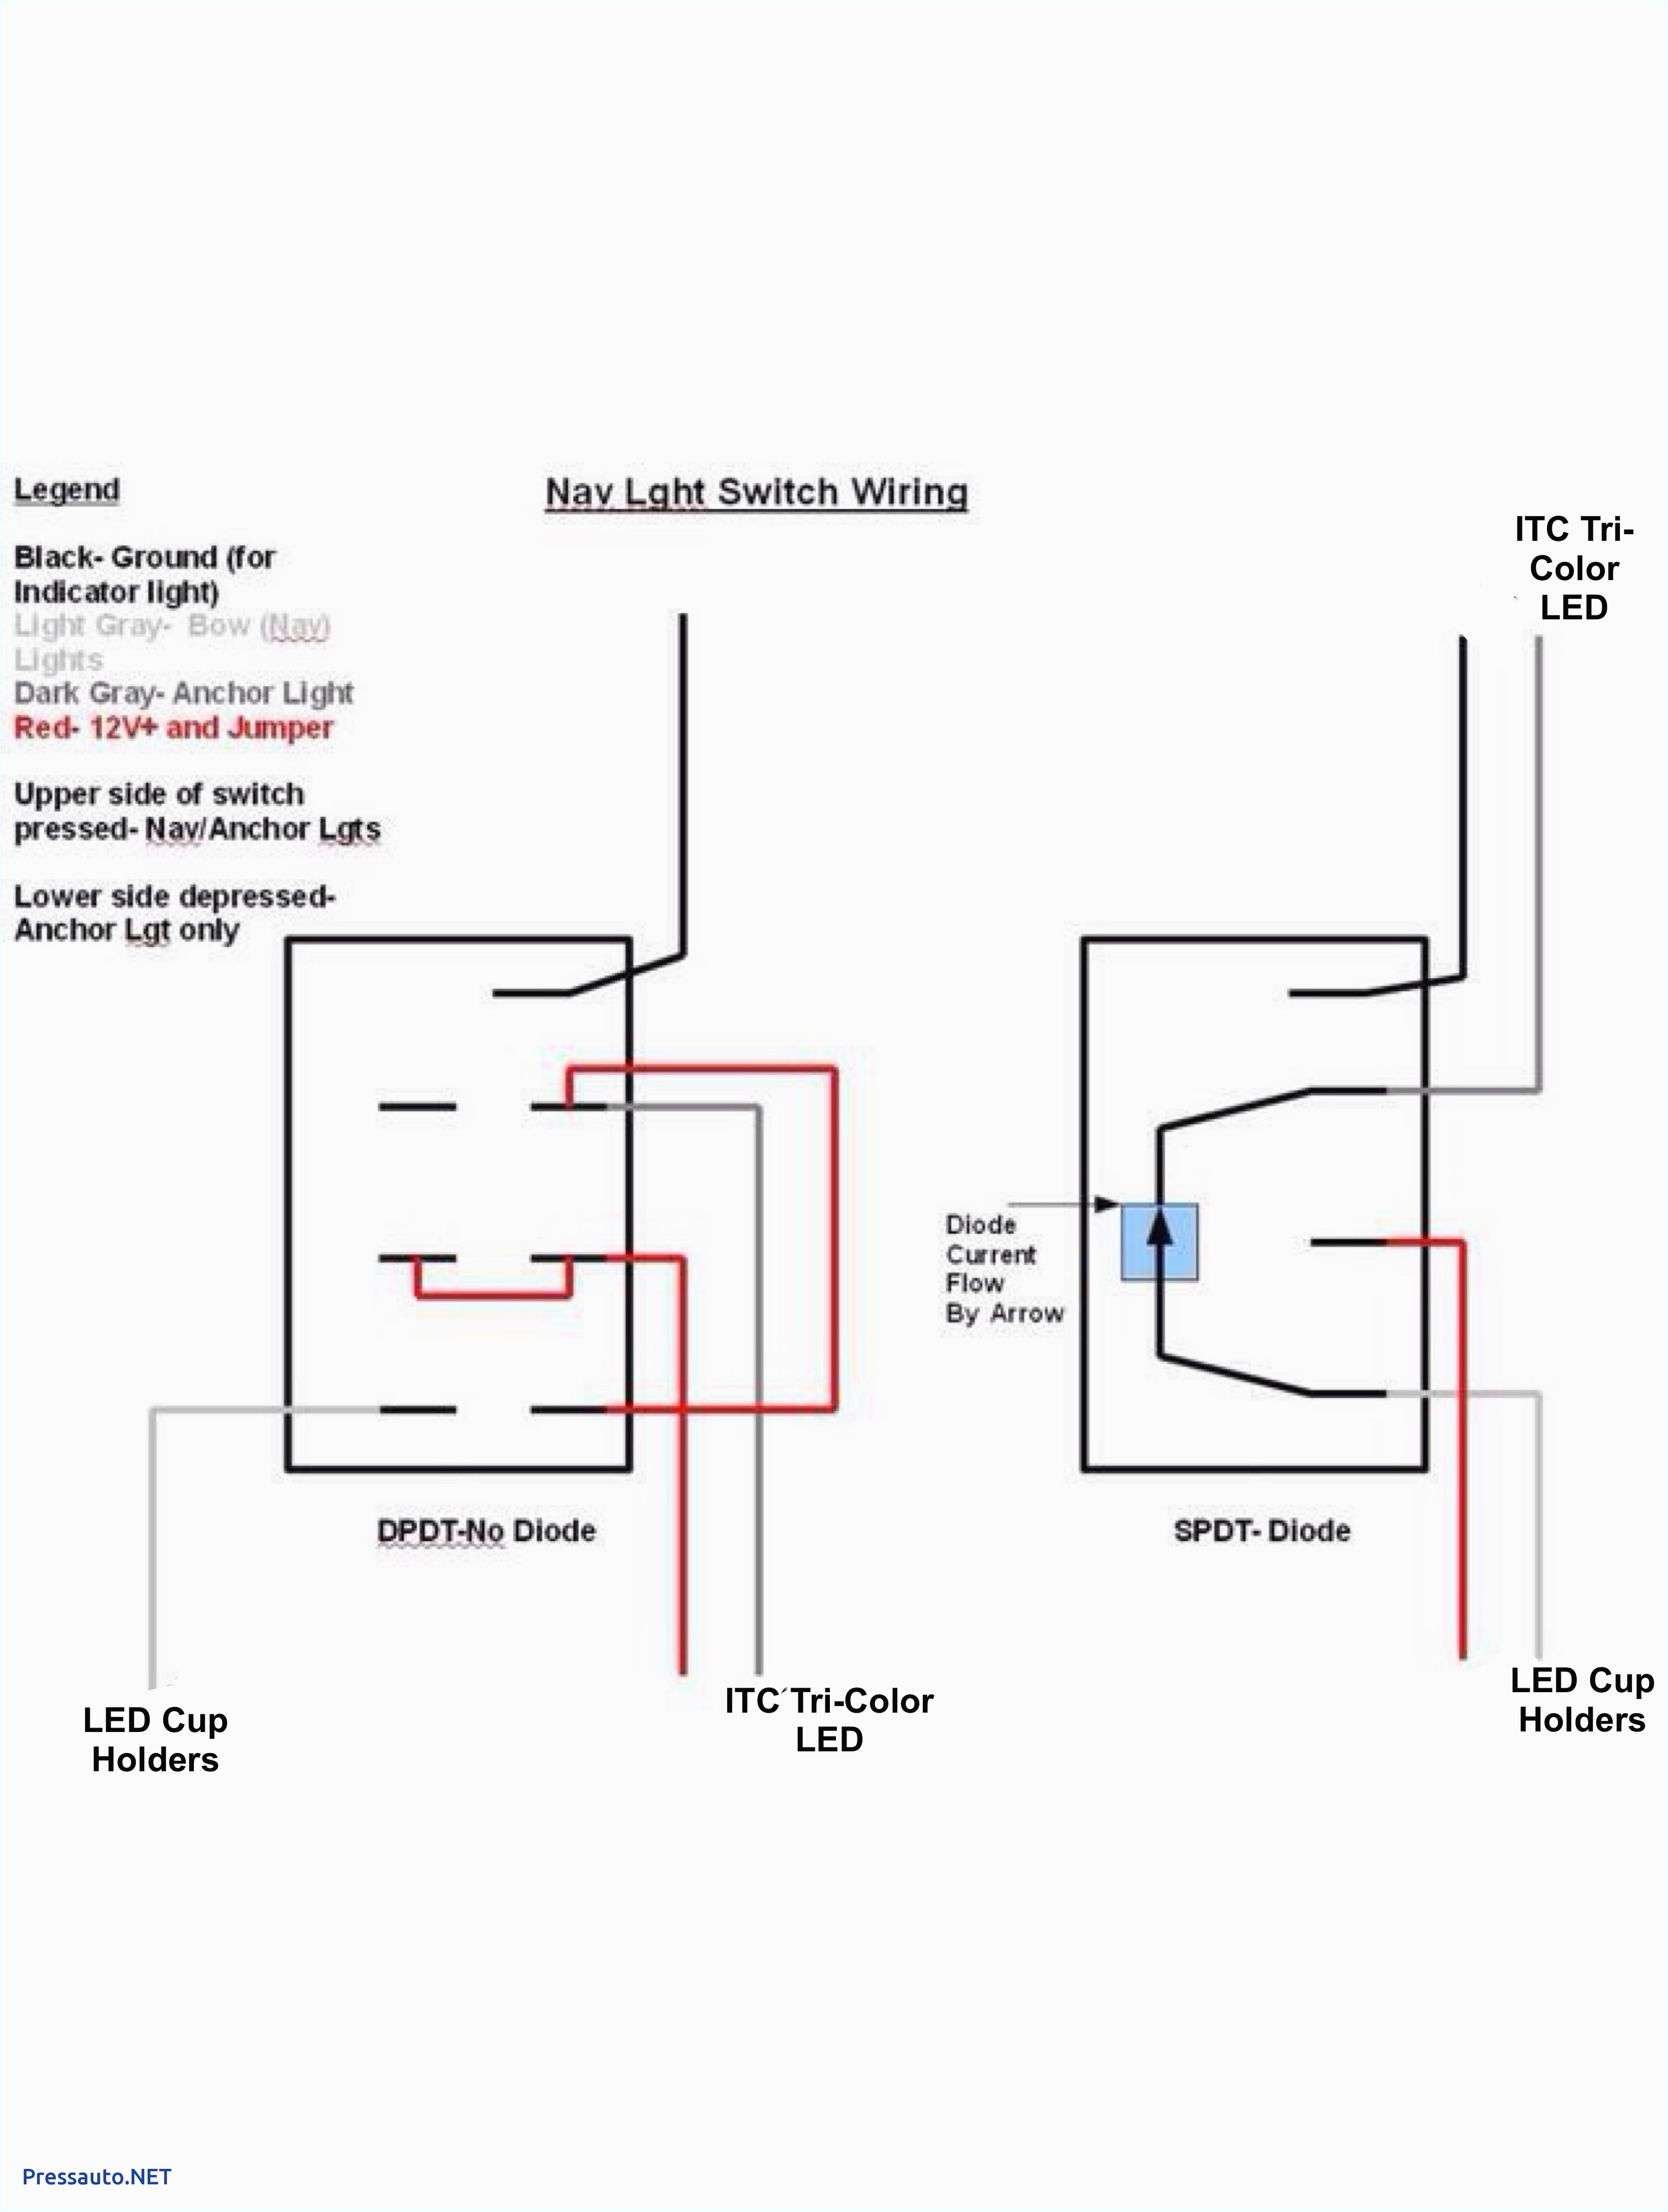 carling technologies rocker switch wiring diagram awesome carling technologies rocker switch wiring diagram free downloads jpg